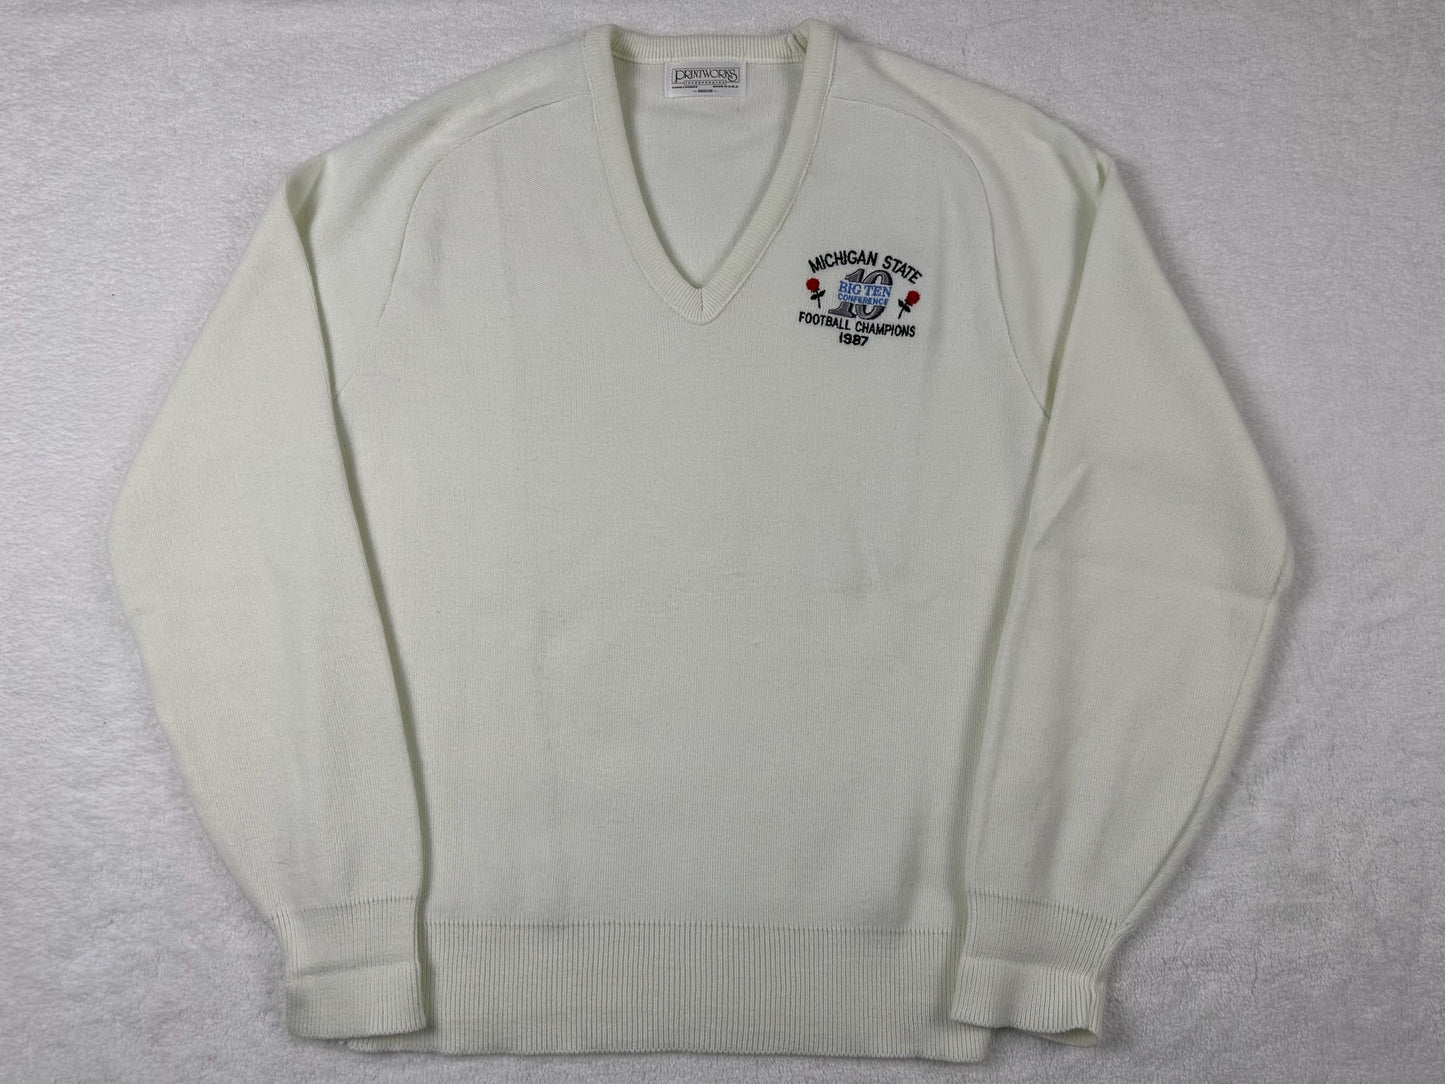 Michigan State 1987 Champions Sweater